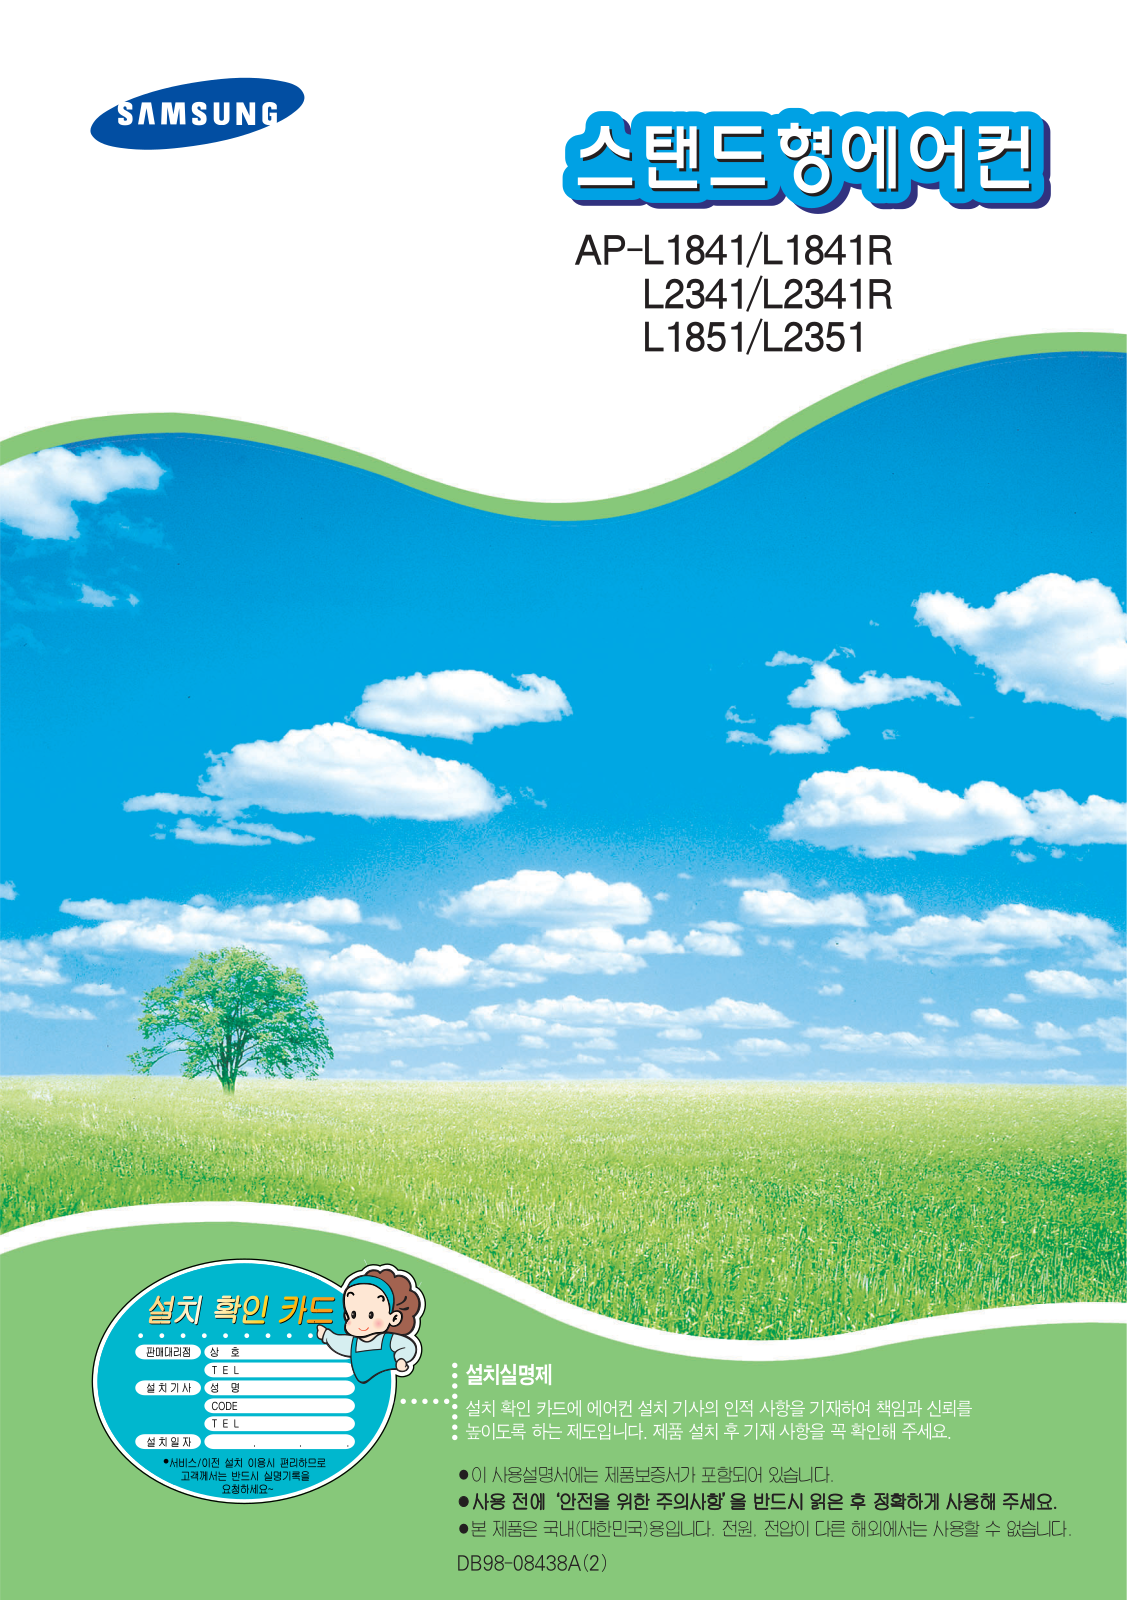 Samsung AP-L2351, AP-L1851, AP-L1551 User Manual